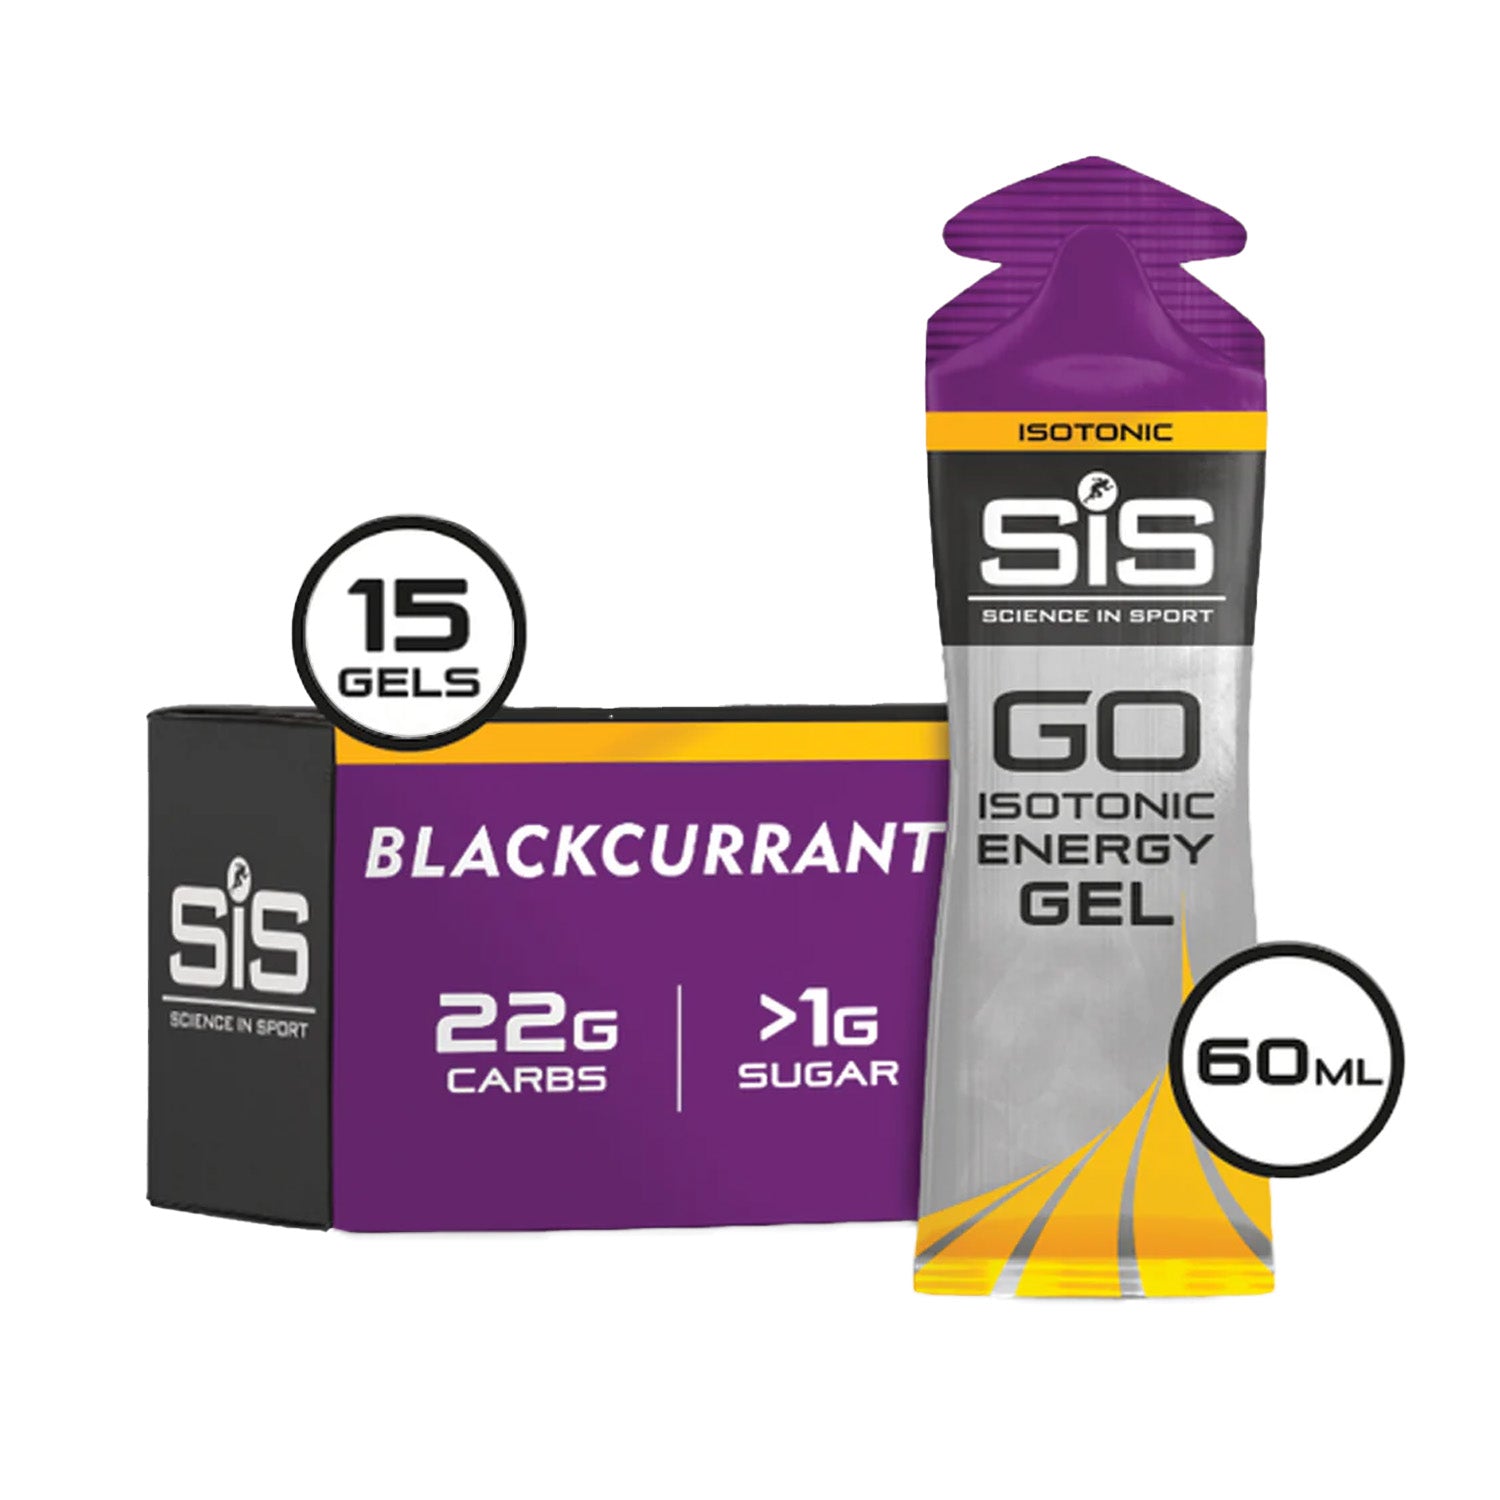 SiS Go Isotonic Energy Gel blackcurrant 15 pack